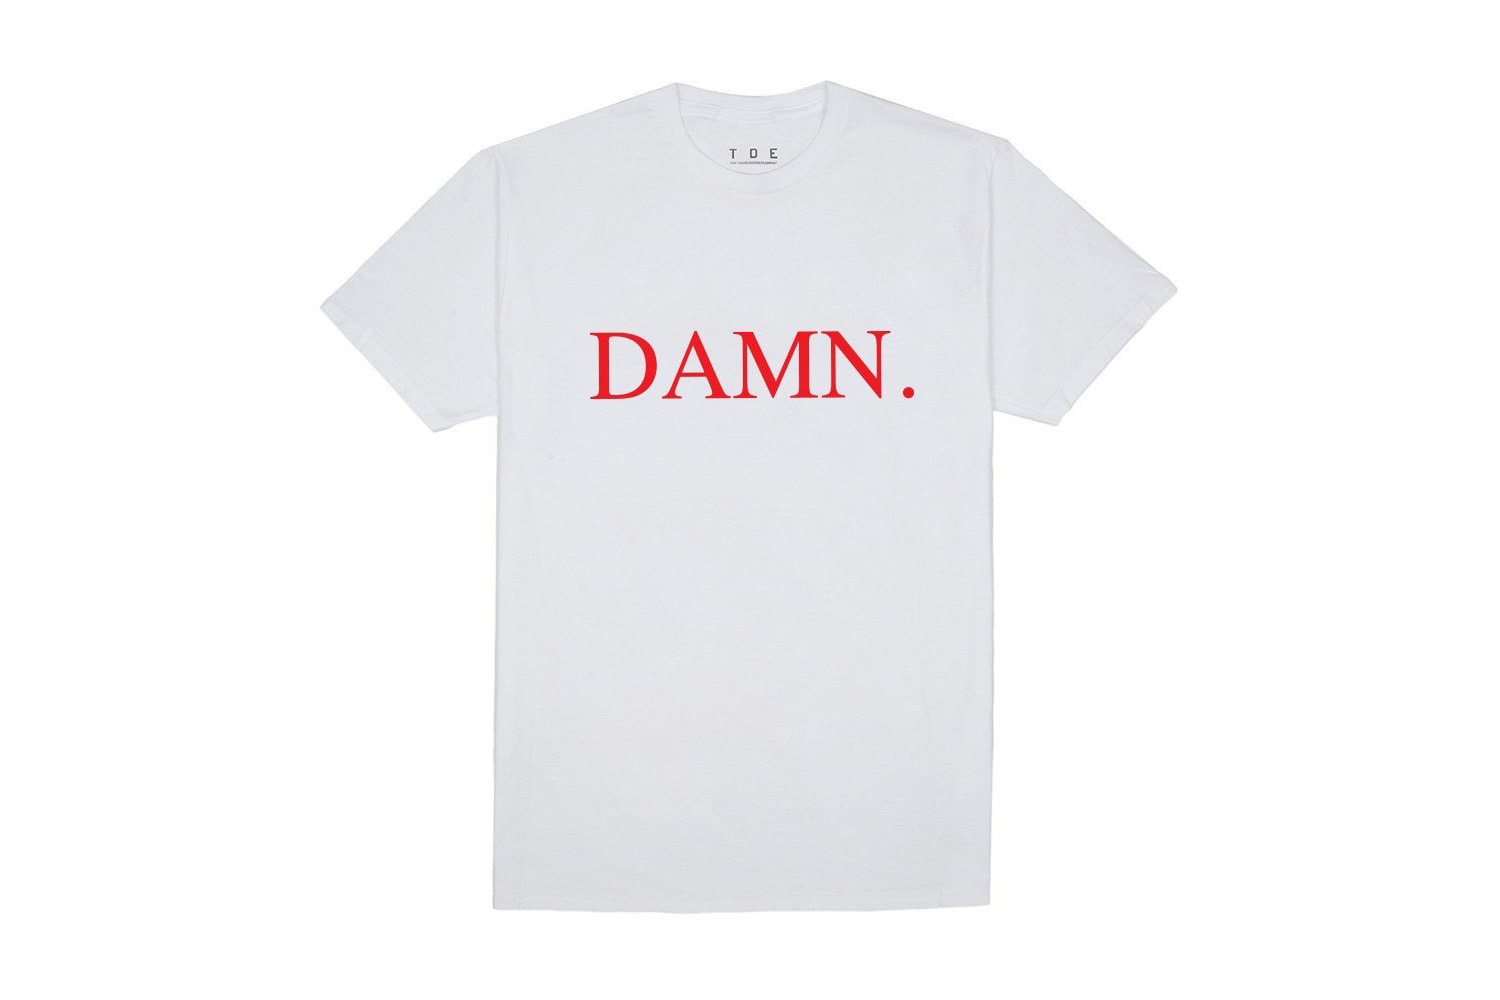 TDE 為 Kendrick Lamar 新專輯《DAMN》打造紀念 T-shirt